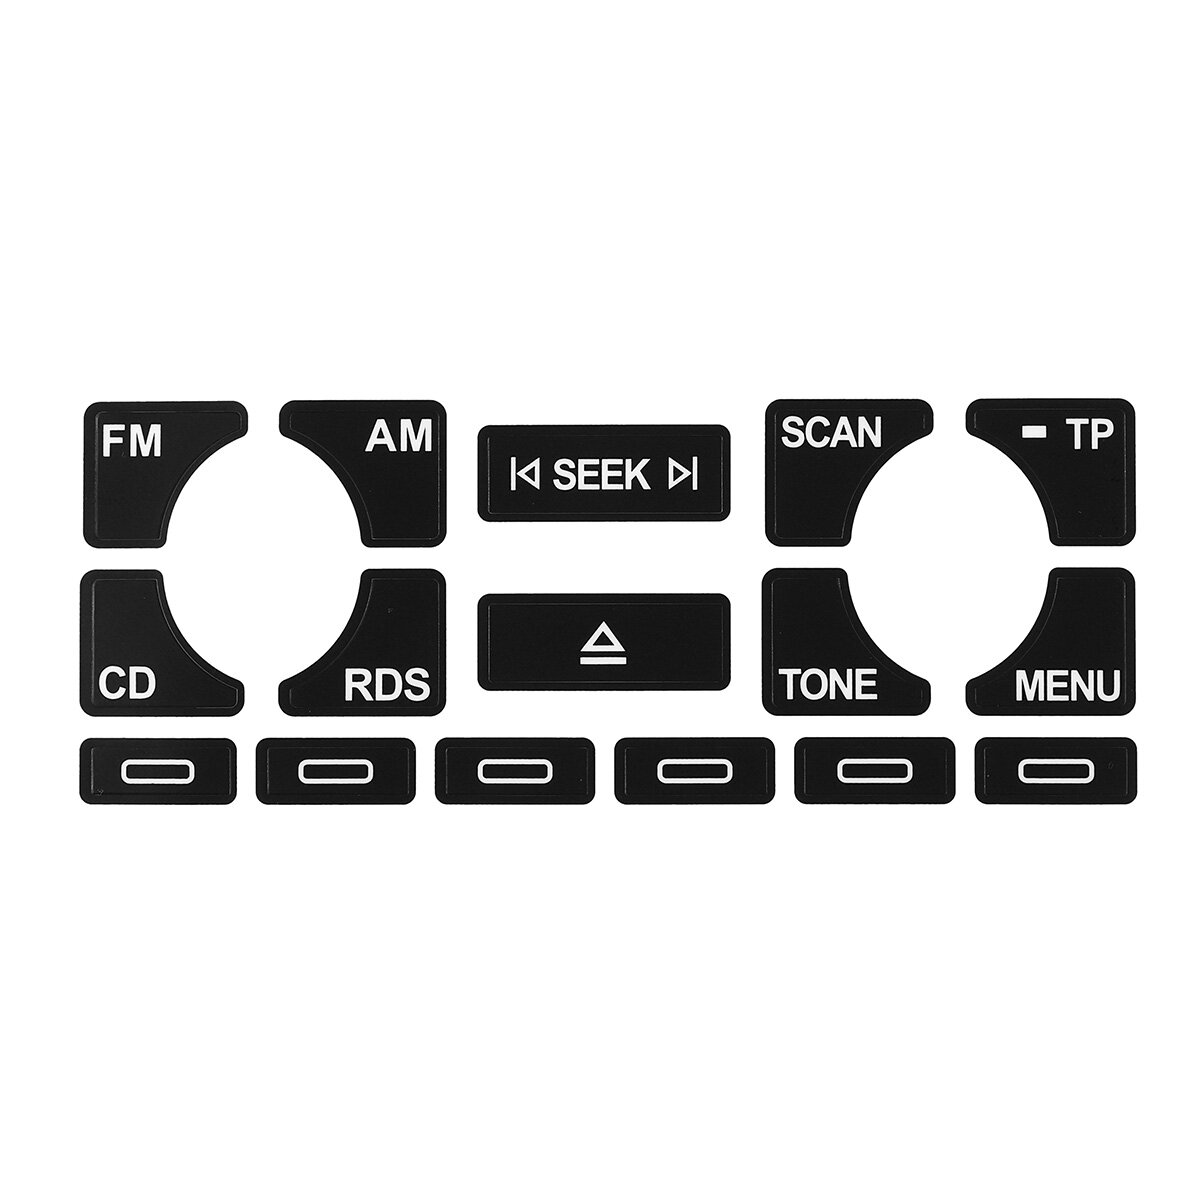 

Car Radio Stereo Worn Peeling Button Repair Decals Stickers For Audi A4 B6 B7 A6 A2 A3 8L/P